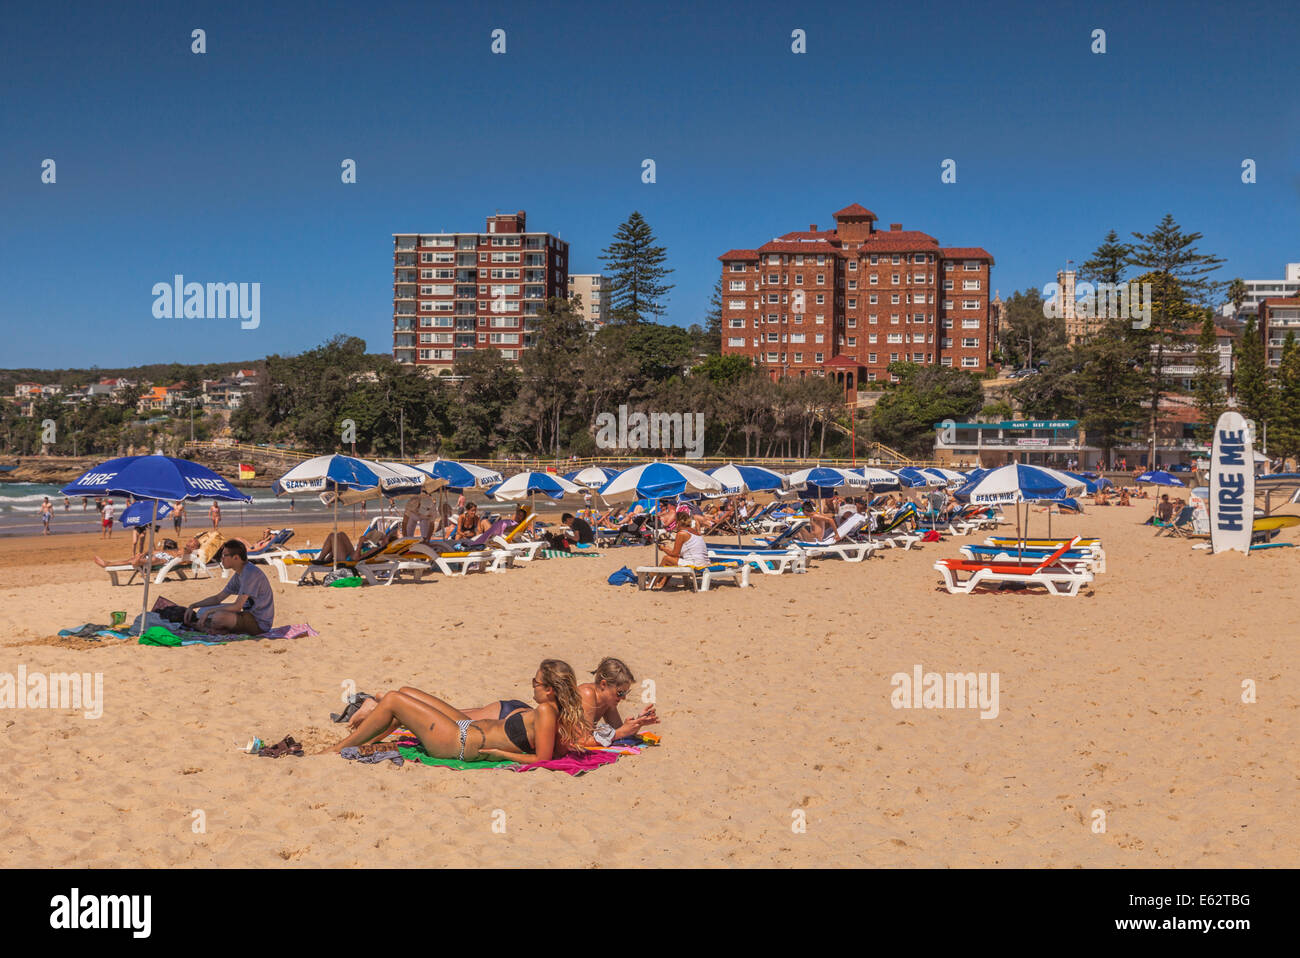 Manly beach, Sydney, Australia, on a beautiful sunny day with clear blue sky. Stock Photo